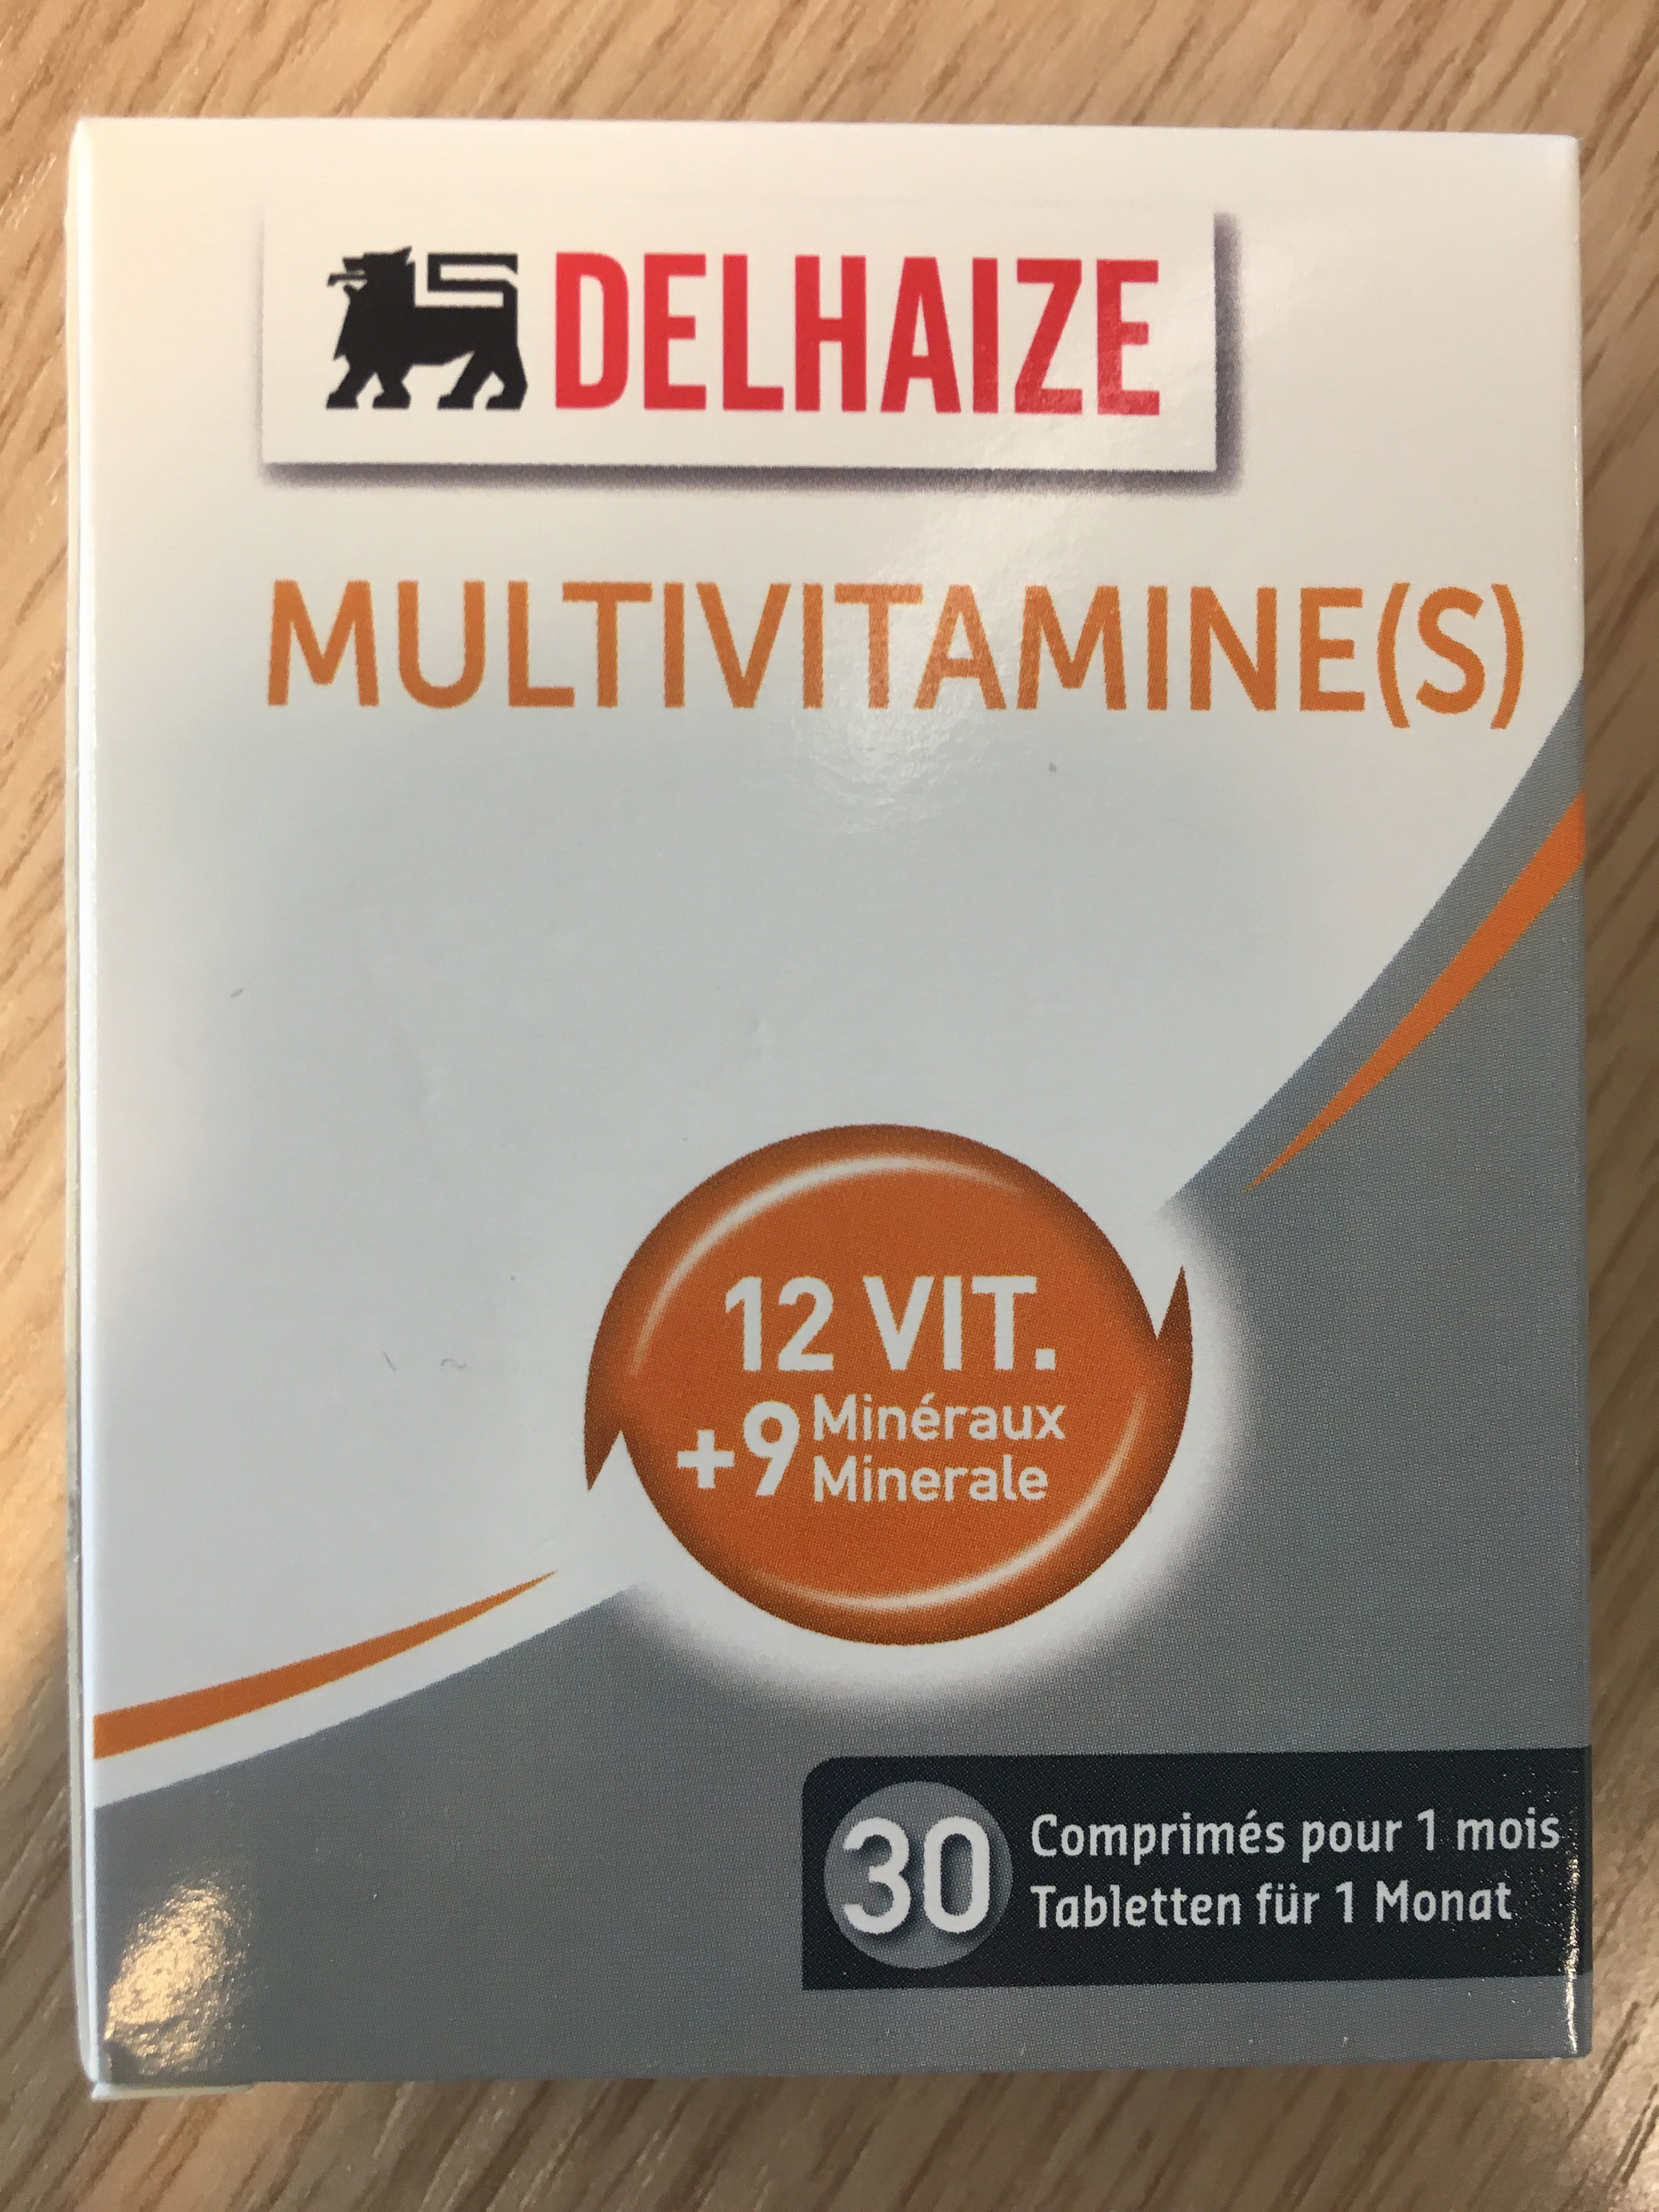 Multivitamines - Product - fr